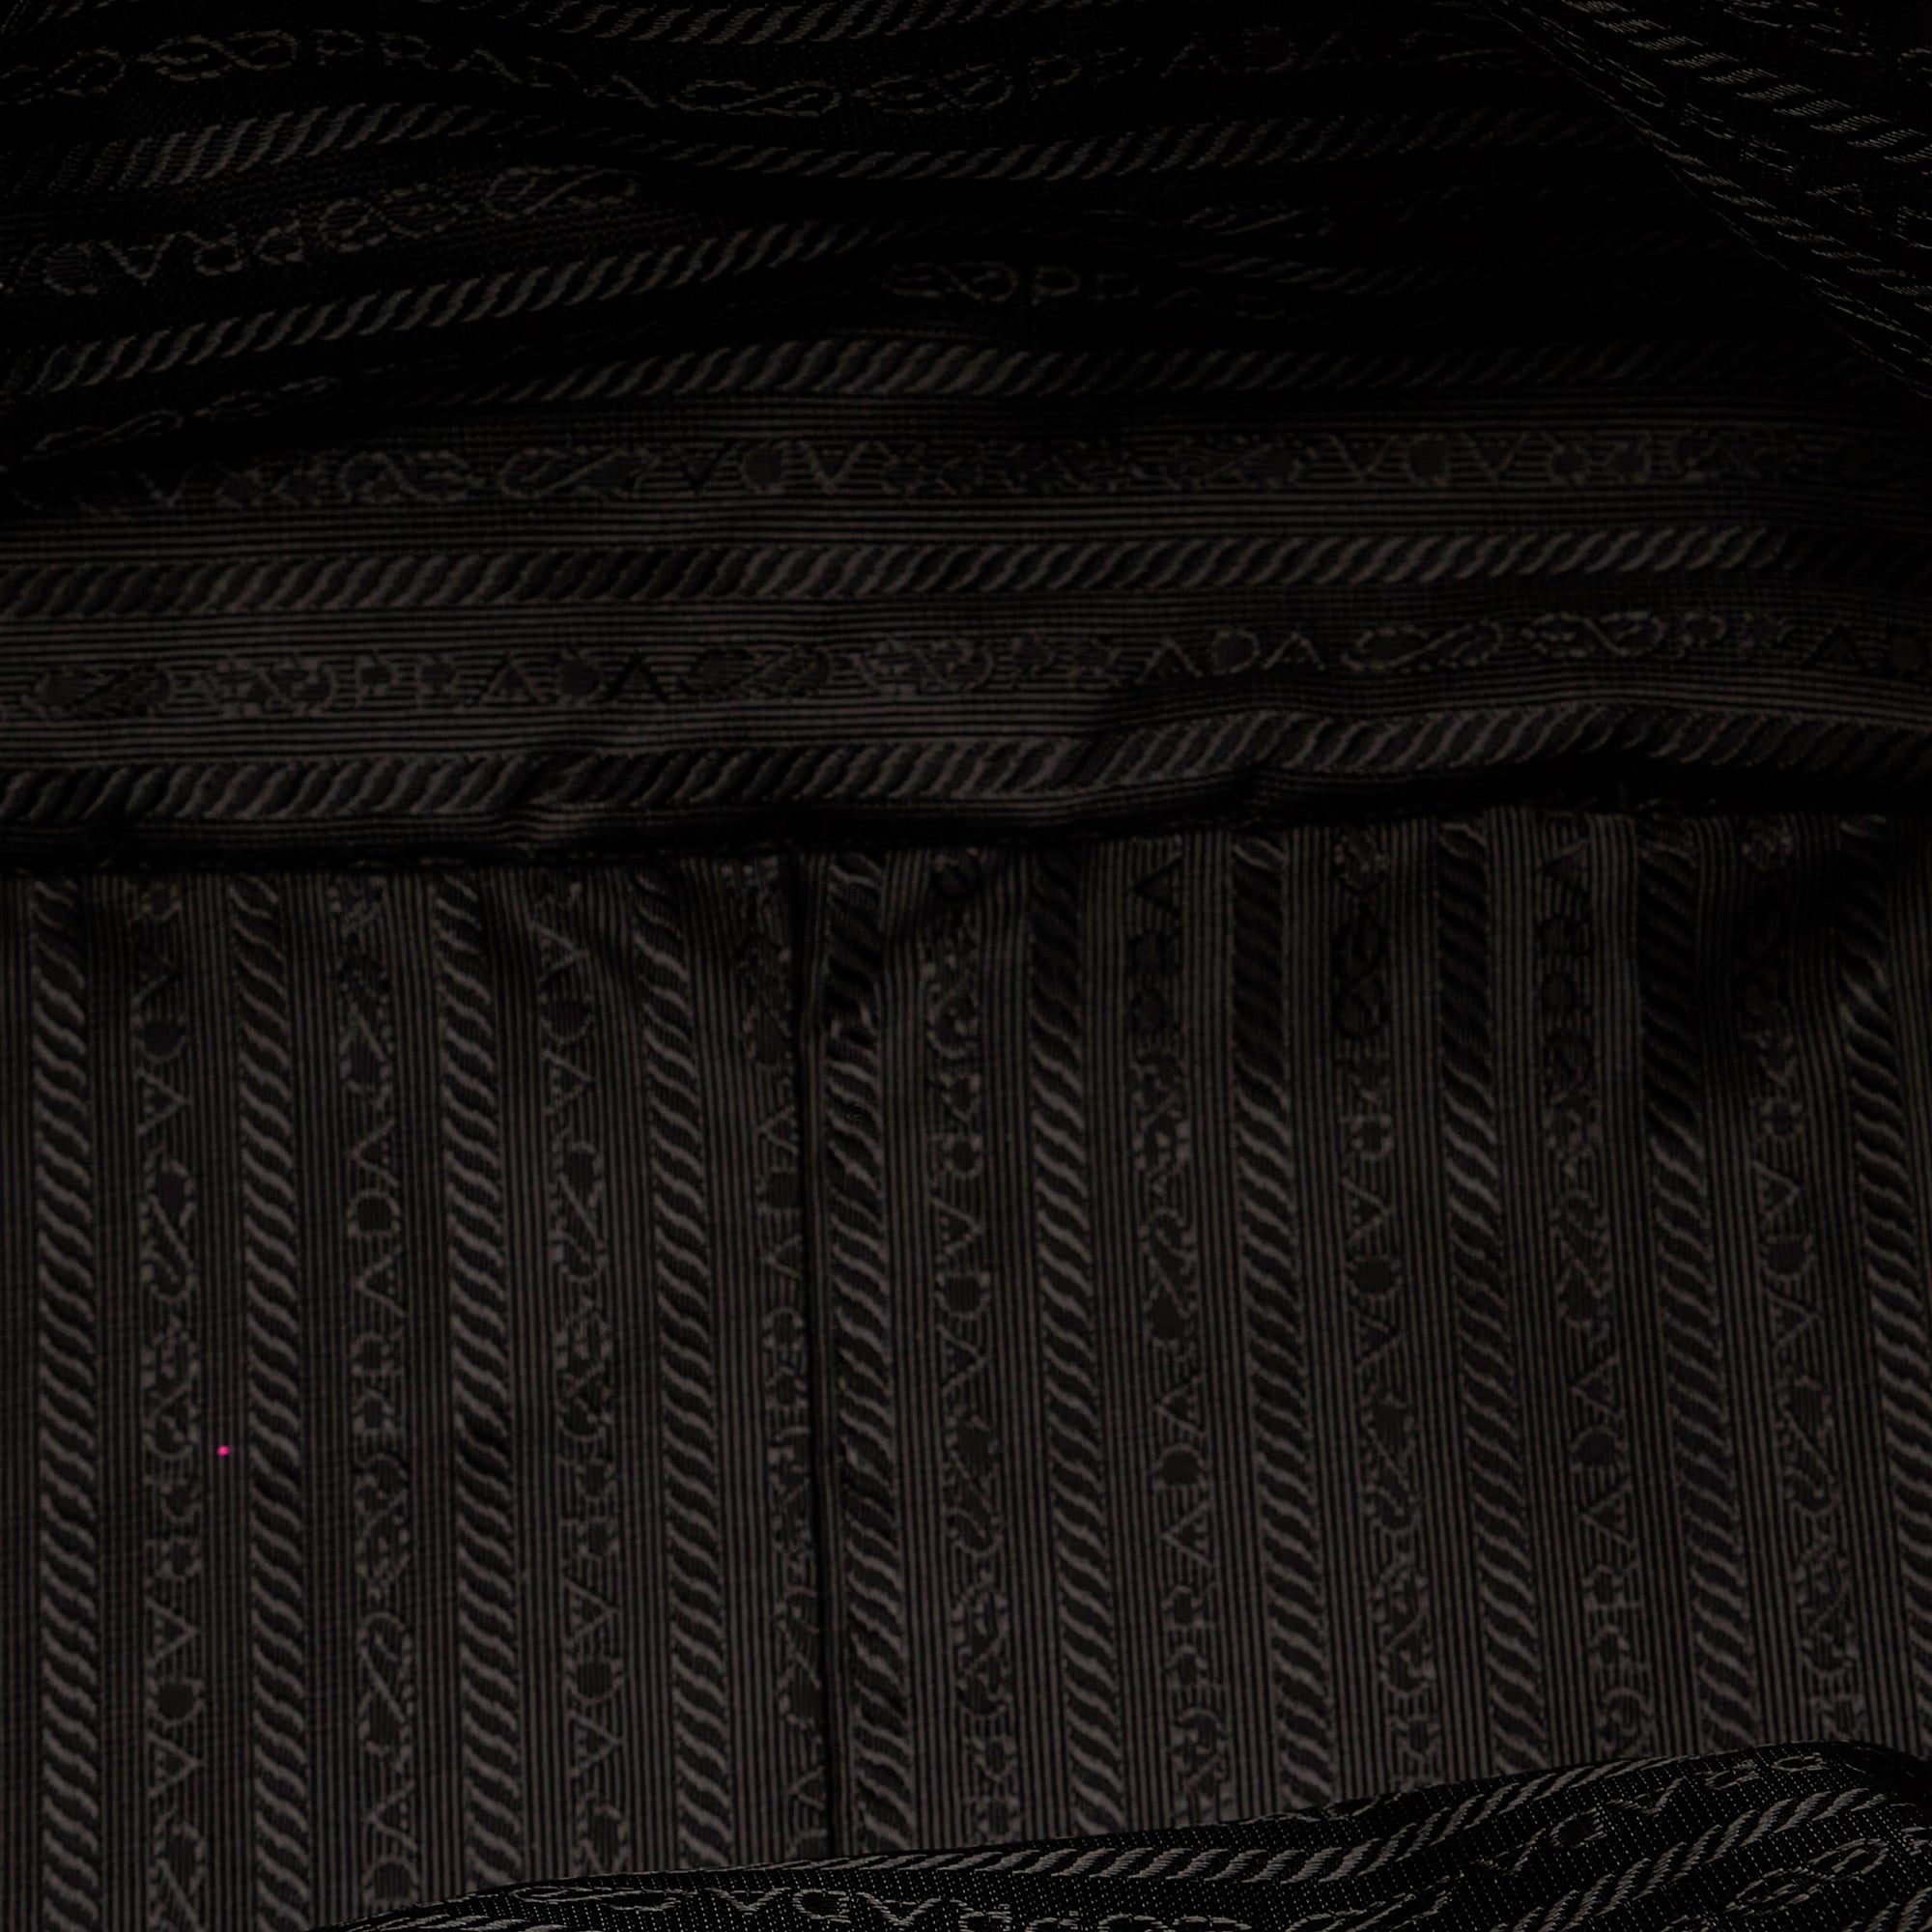 Black Prada Tessuto Shoulder Bag - Designer Revival